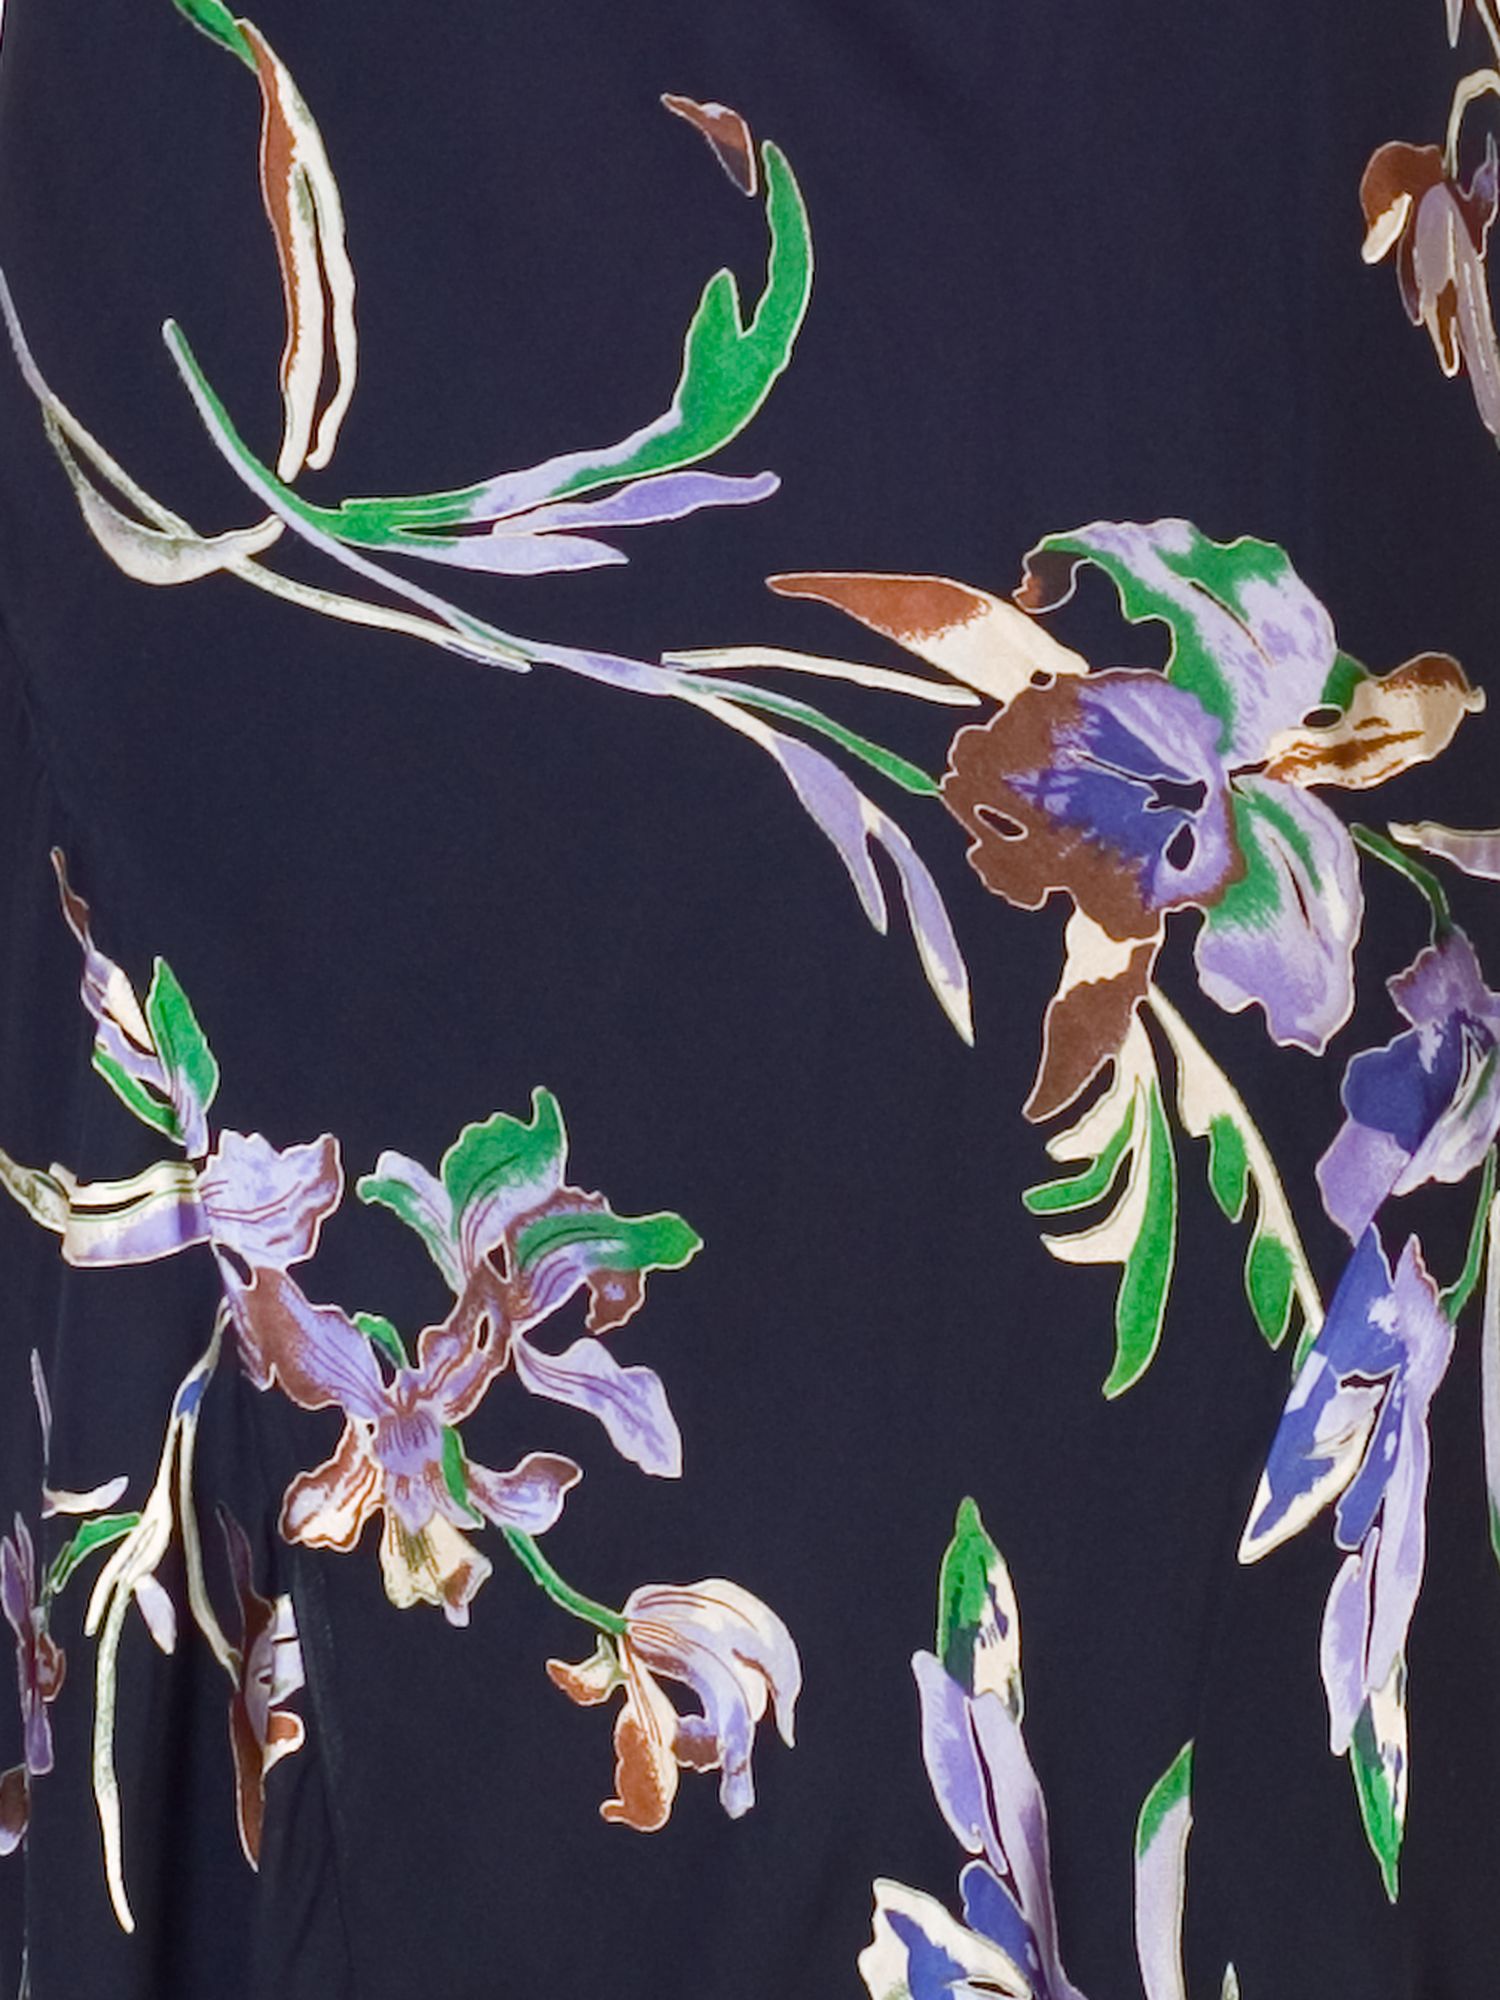 chesca Iris Floral Print Devoree Sleeveless Midi Dress, Navy/Multi, 14